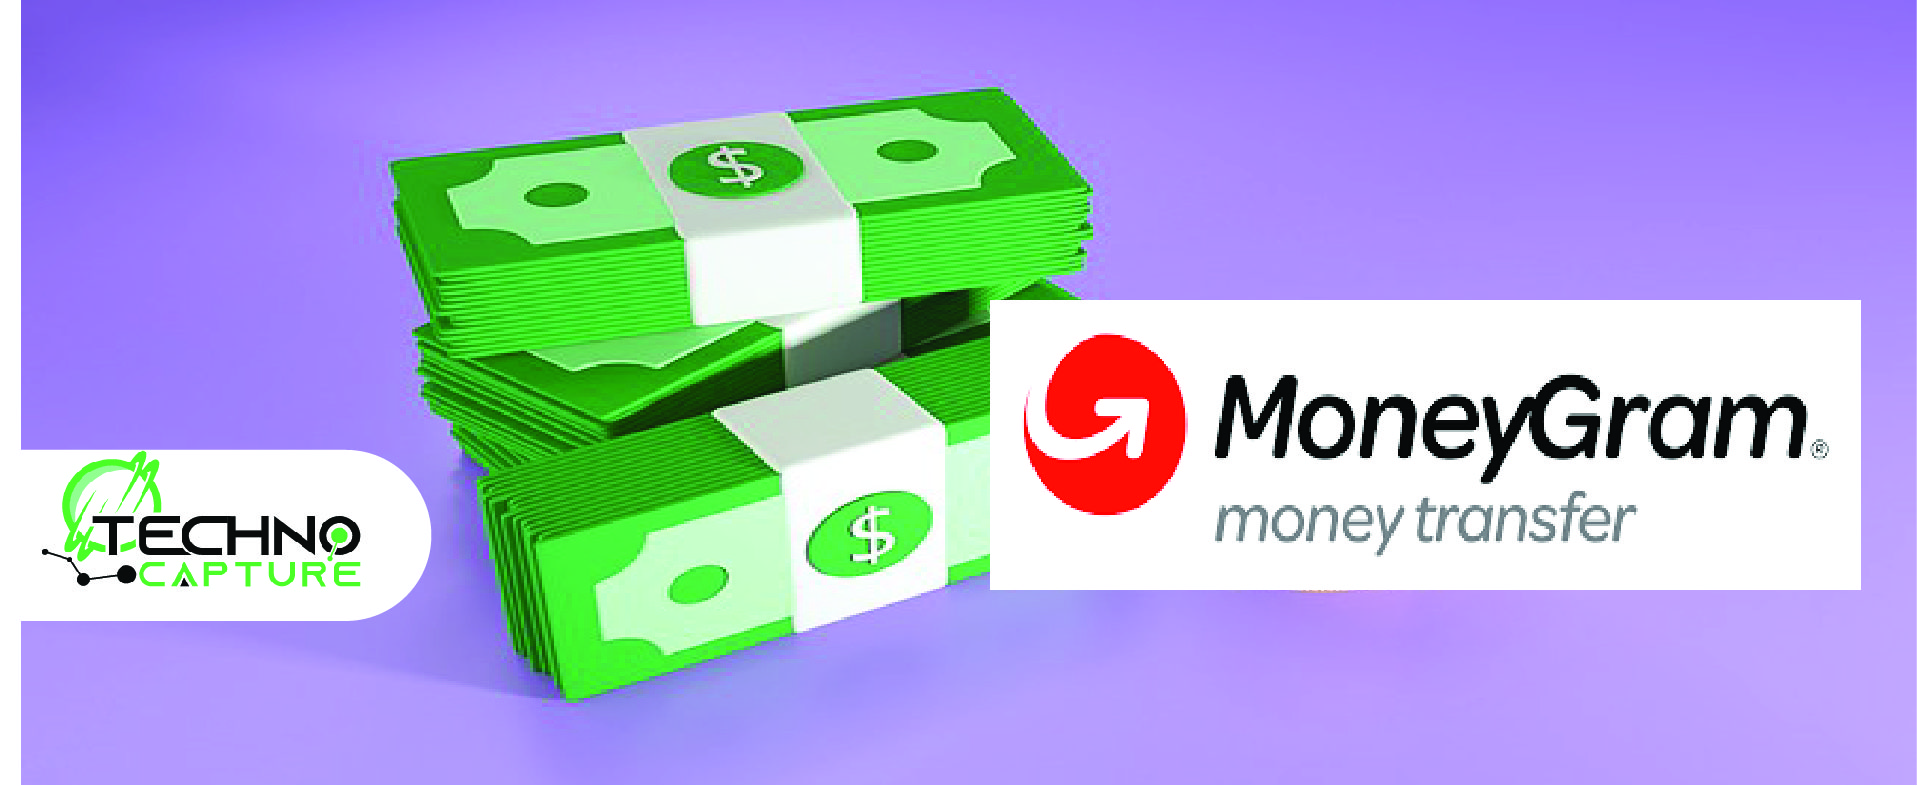 How To Receive A MoneyGram: A Detailed Guide